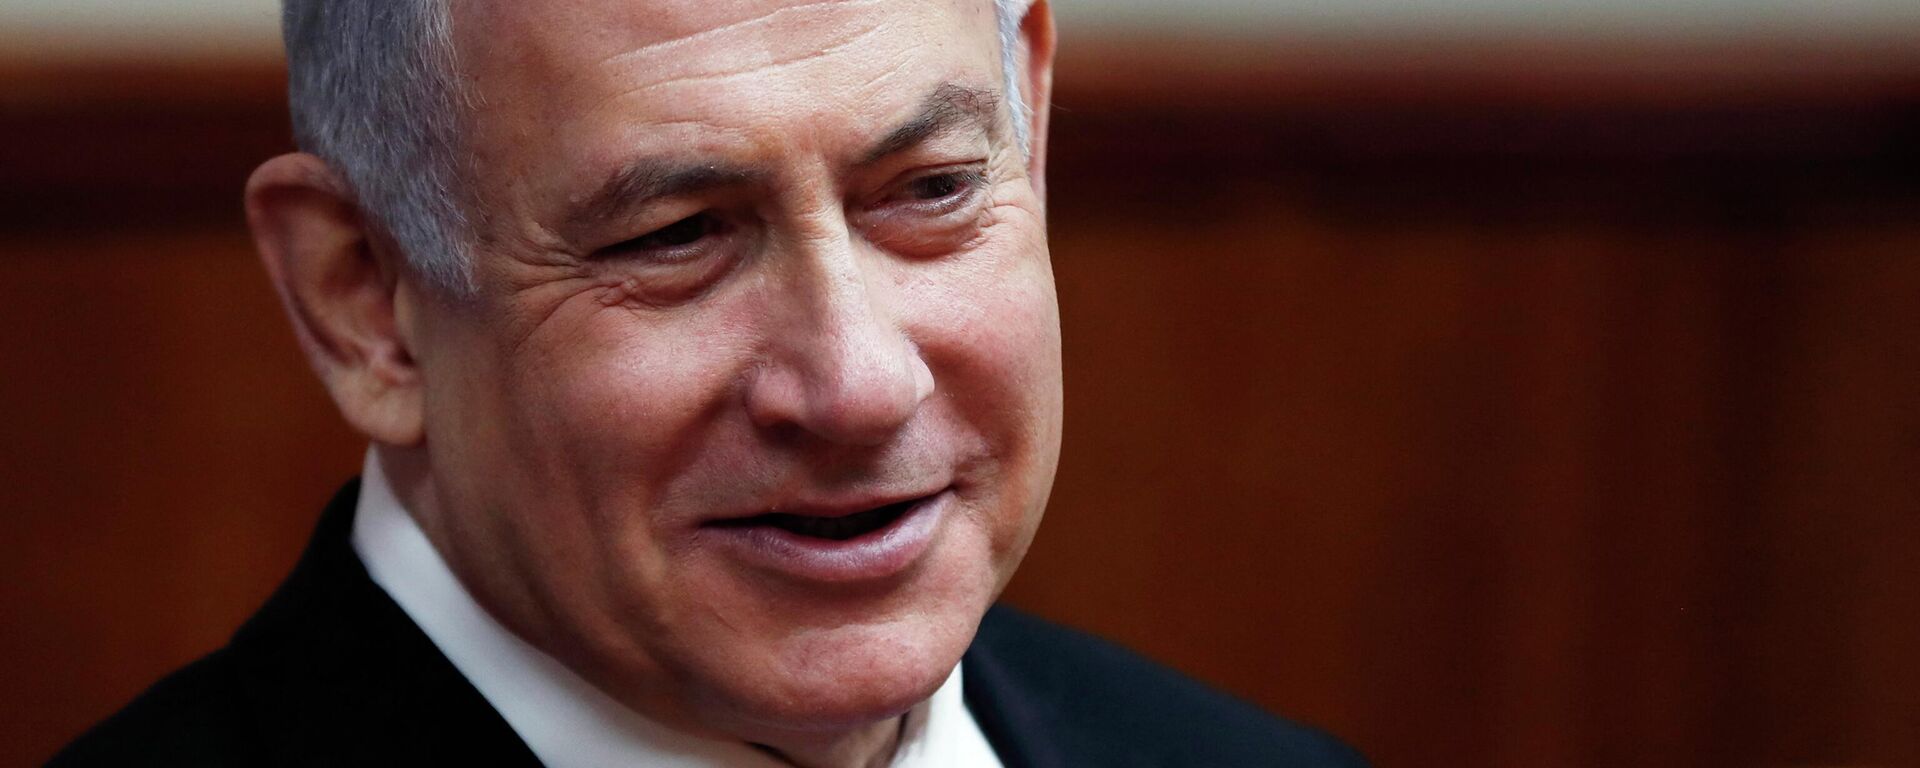 FILE PHOTO: Israeli Prime Minister Benjamin Netanyahu smiles during the weekly cabinet meeting in Jerusalem December 8, 2019.  - Sputnik International, 1920, 01.11.2022